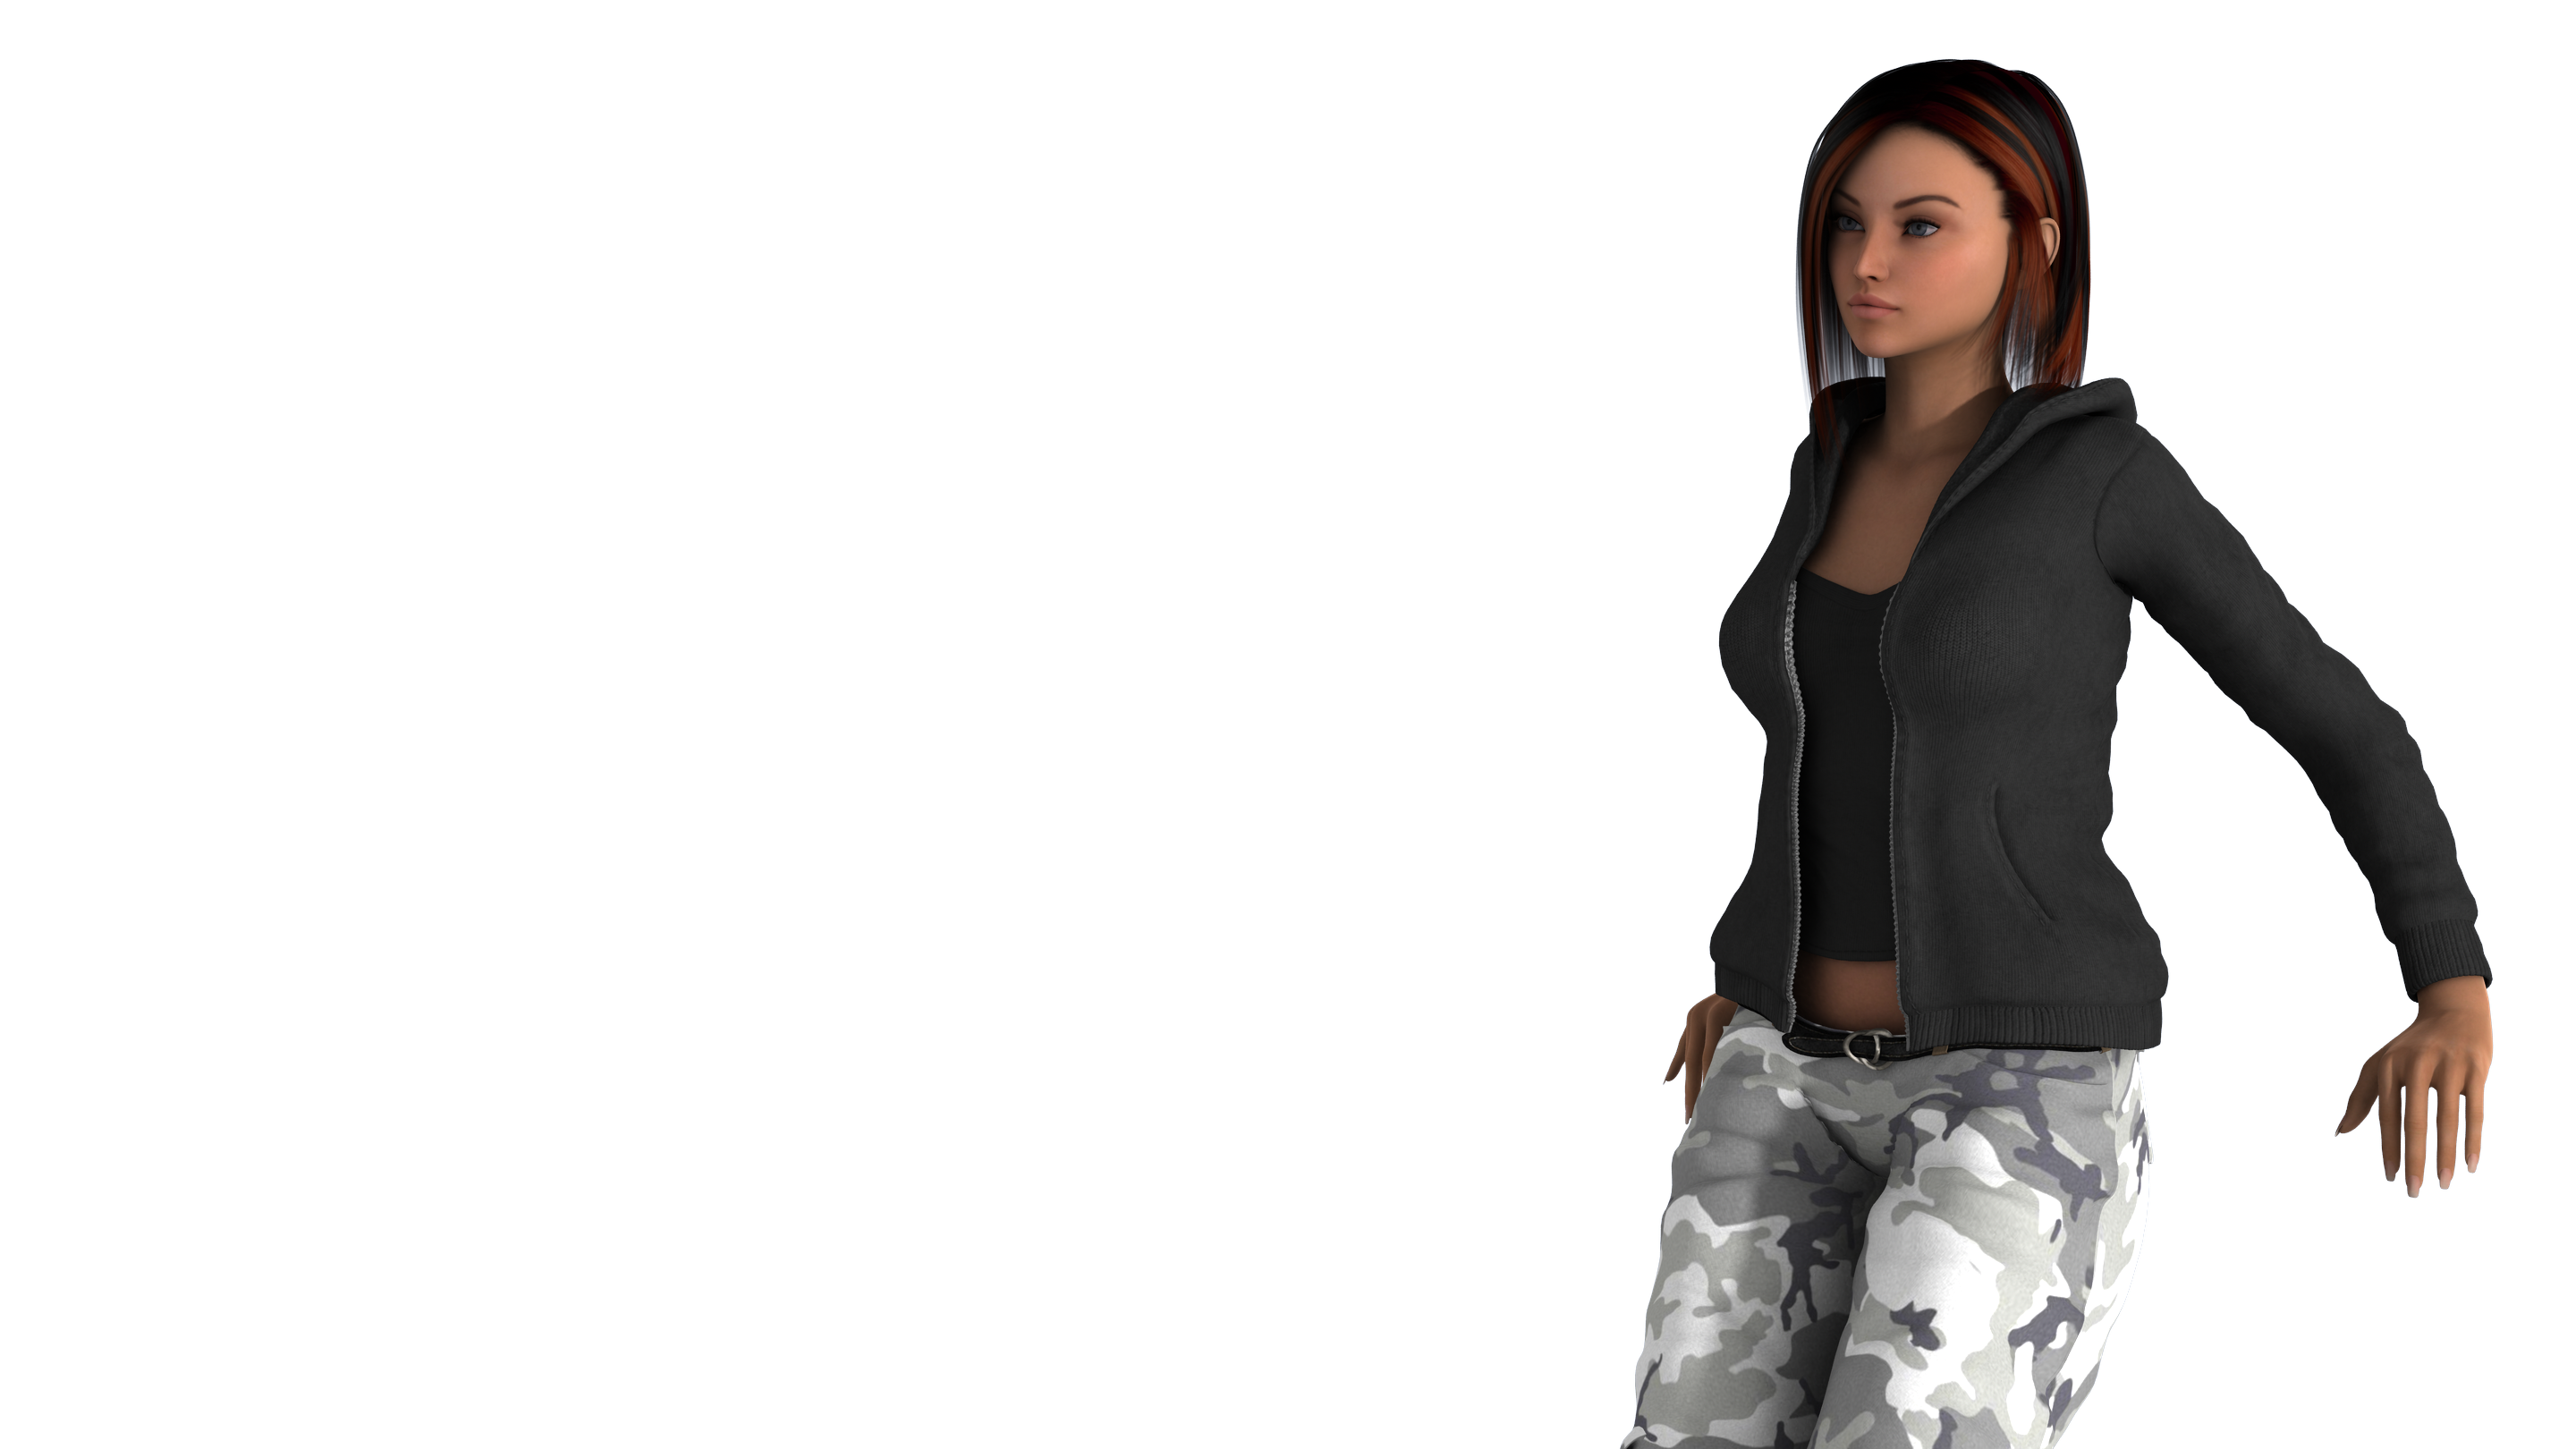 General 2880x1620 CGI women digital art simple background black background redhead